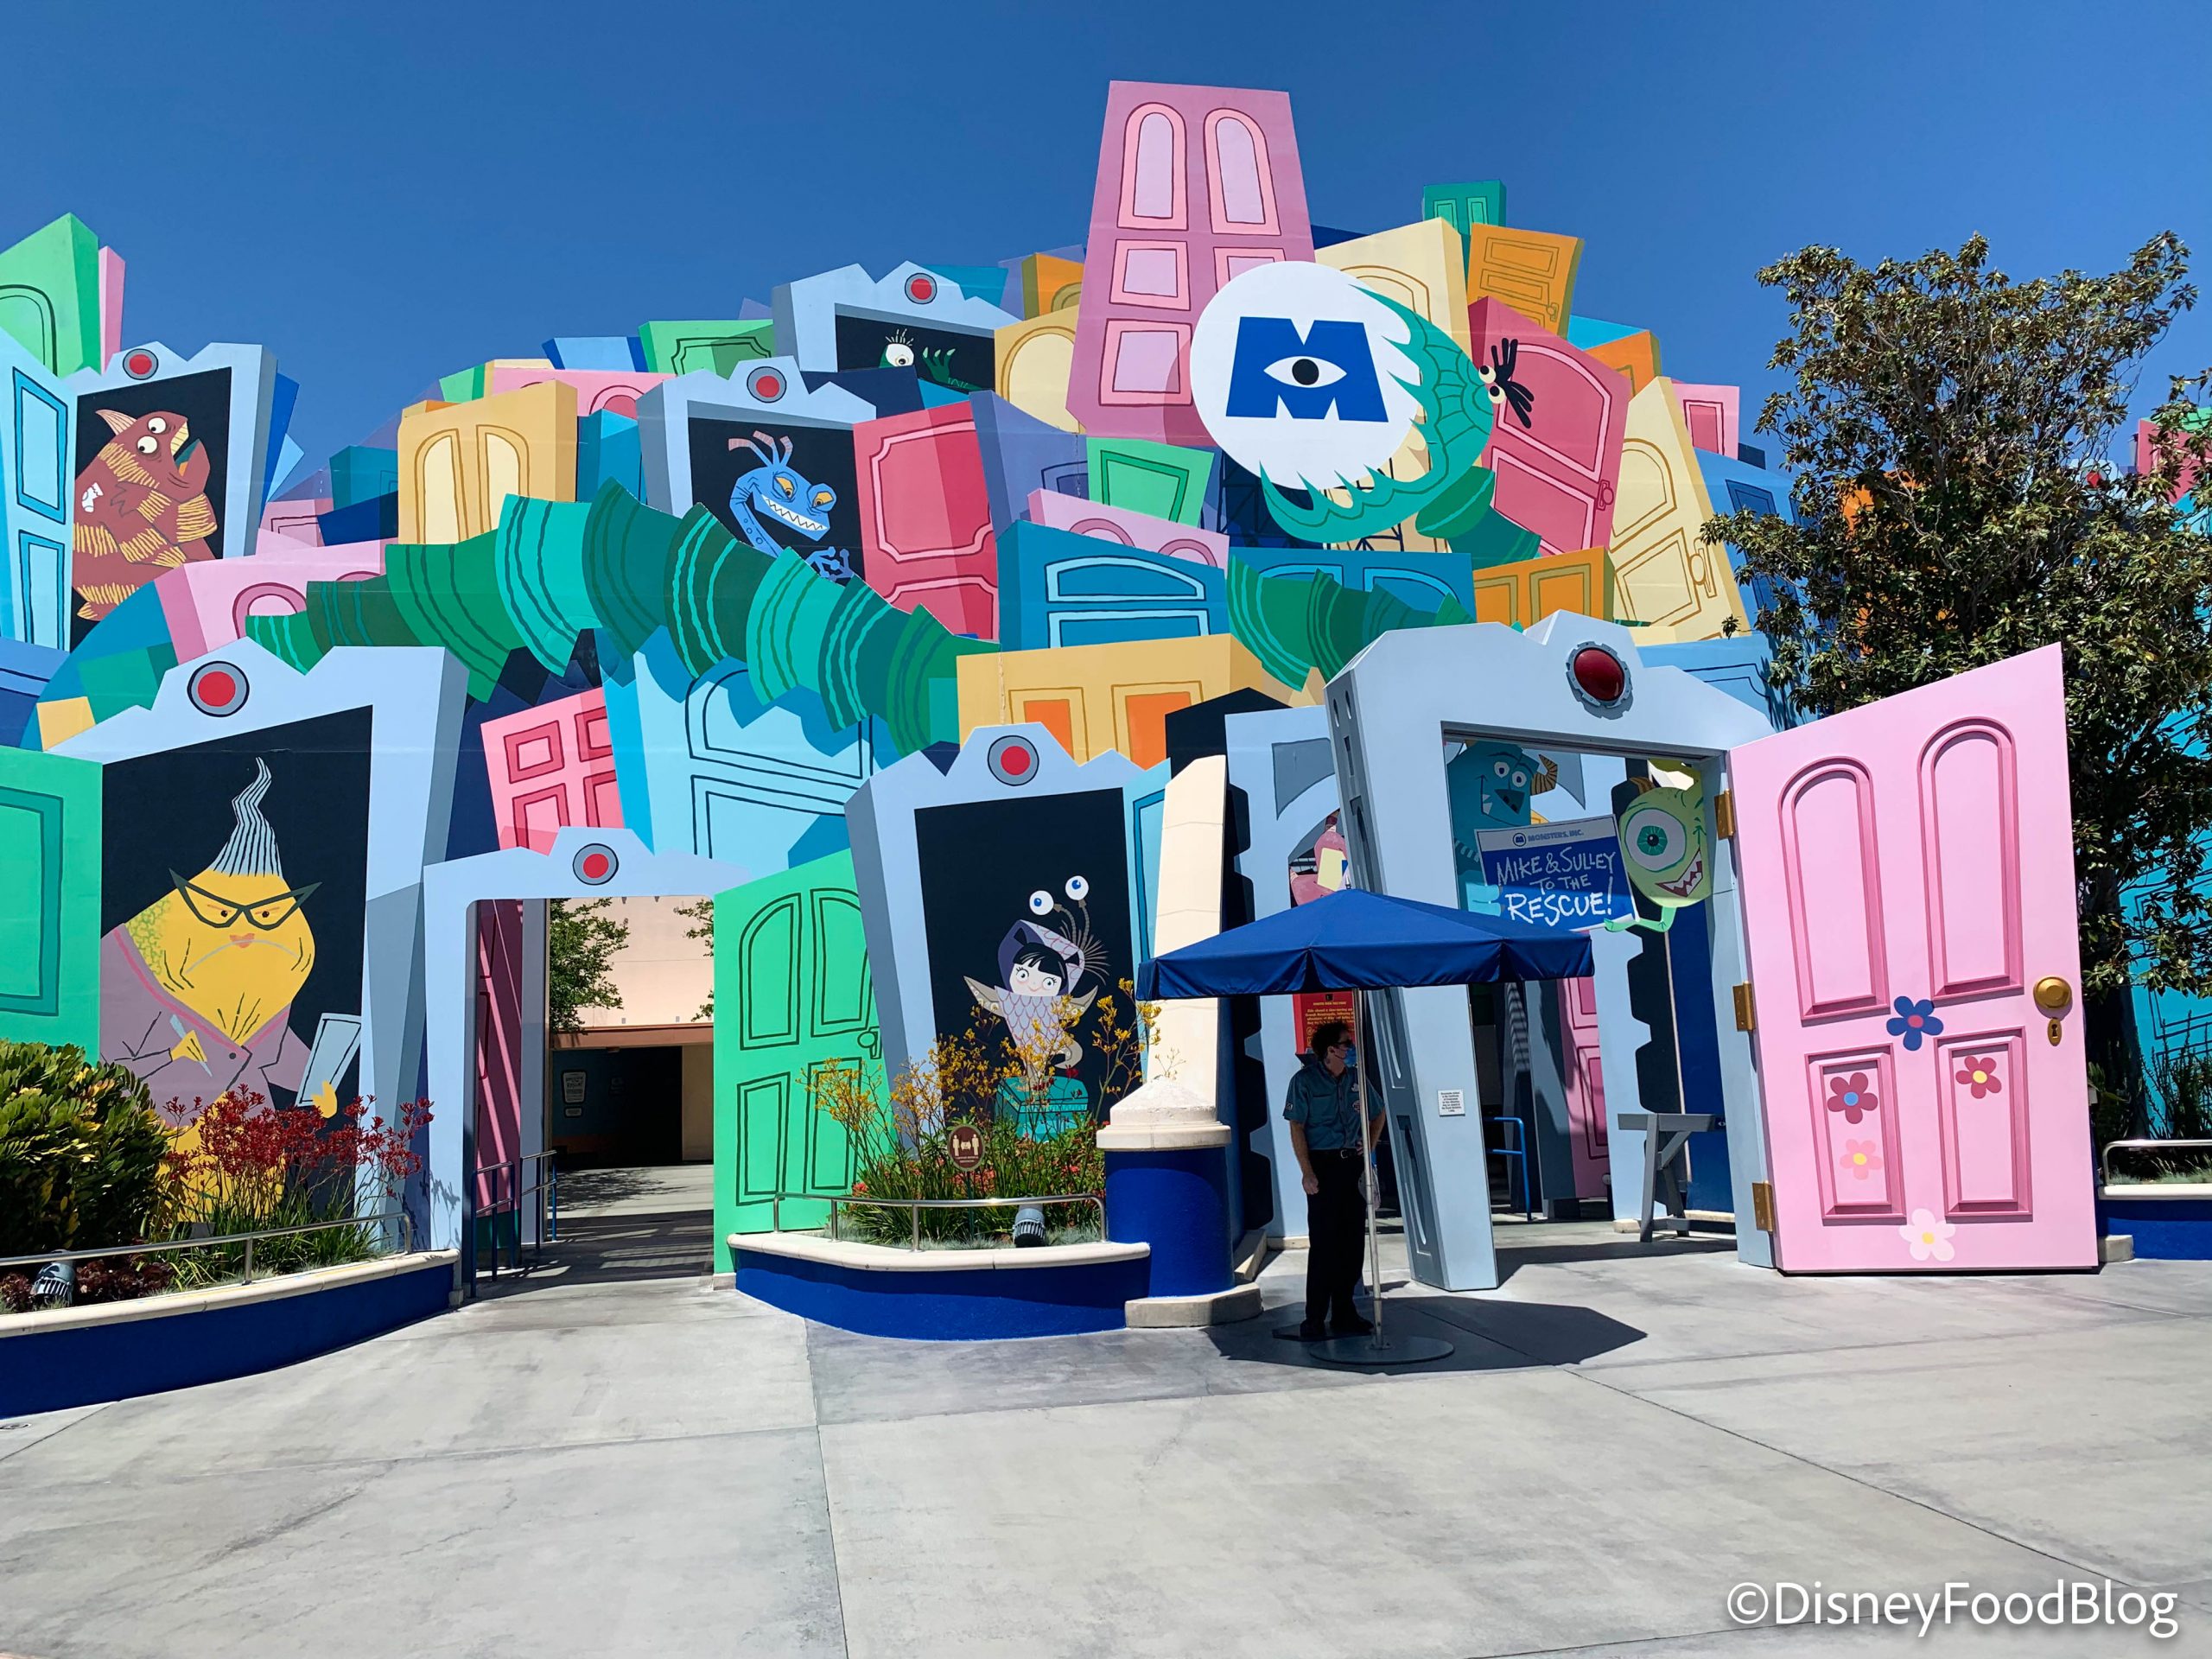 Disneyland's Monsters, Inc. Ride Is Closing for Refurbishment SOON